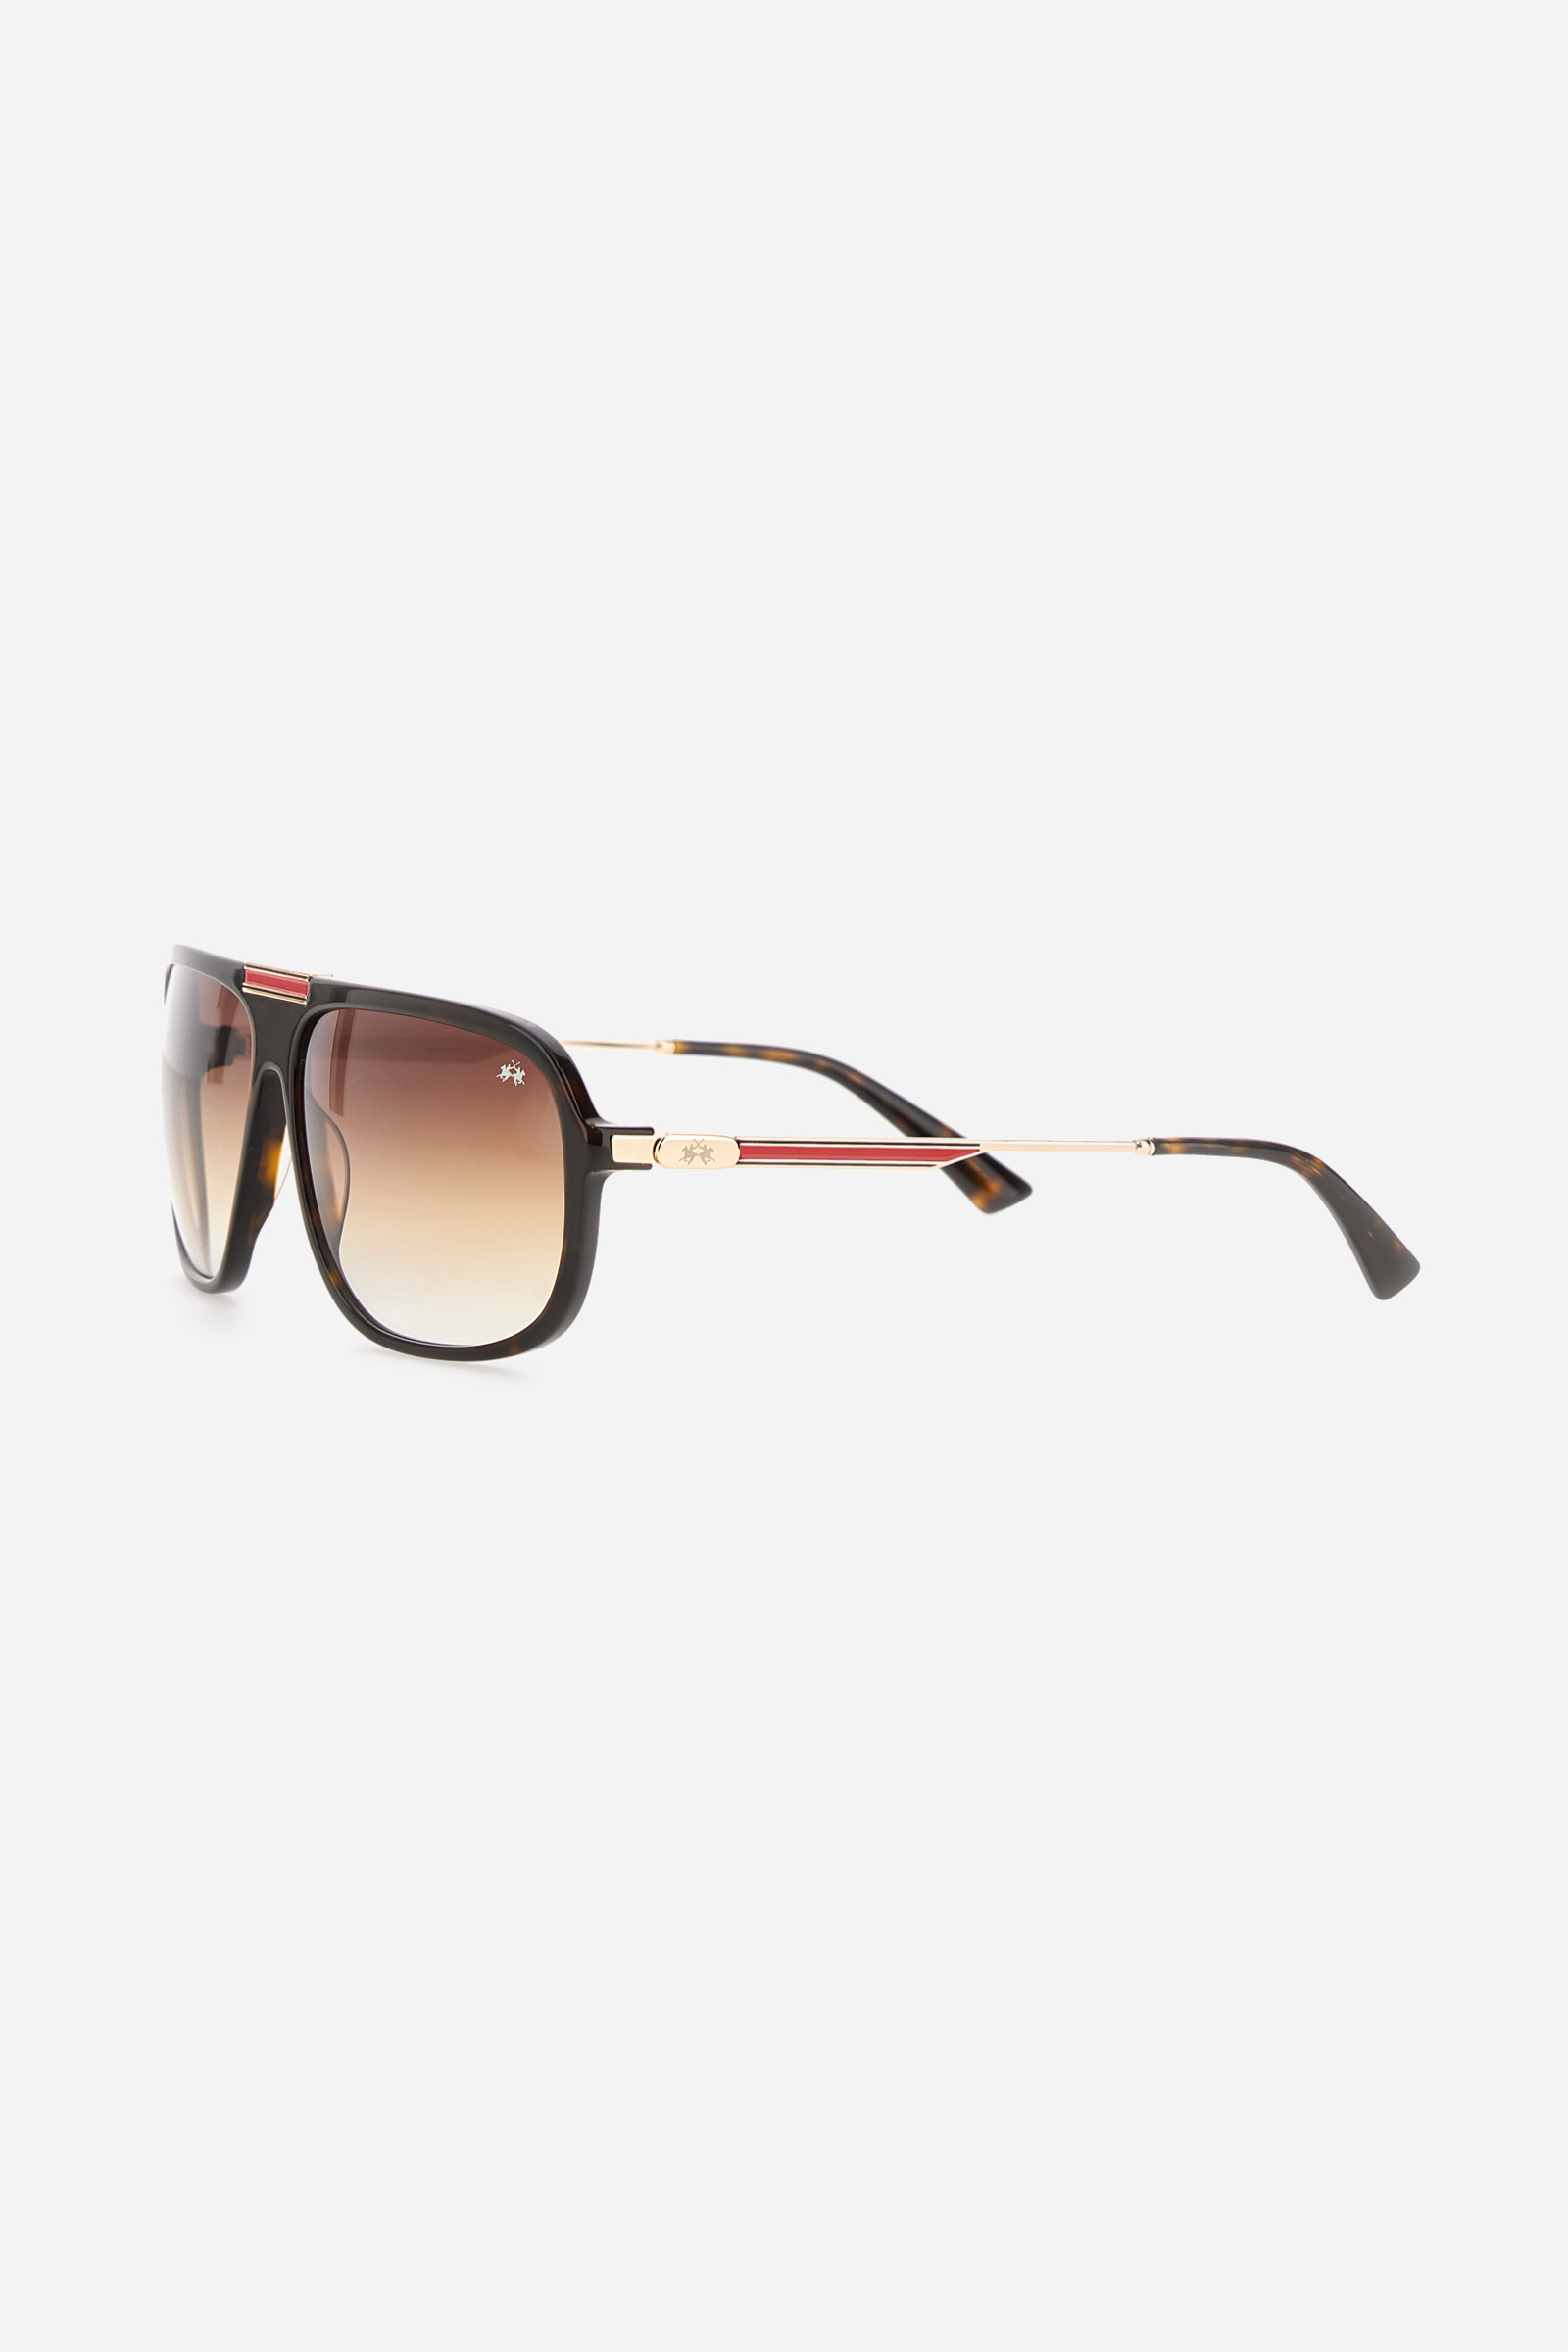 Sunglasses aviator style Dark Avana Martina Online La | Shop